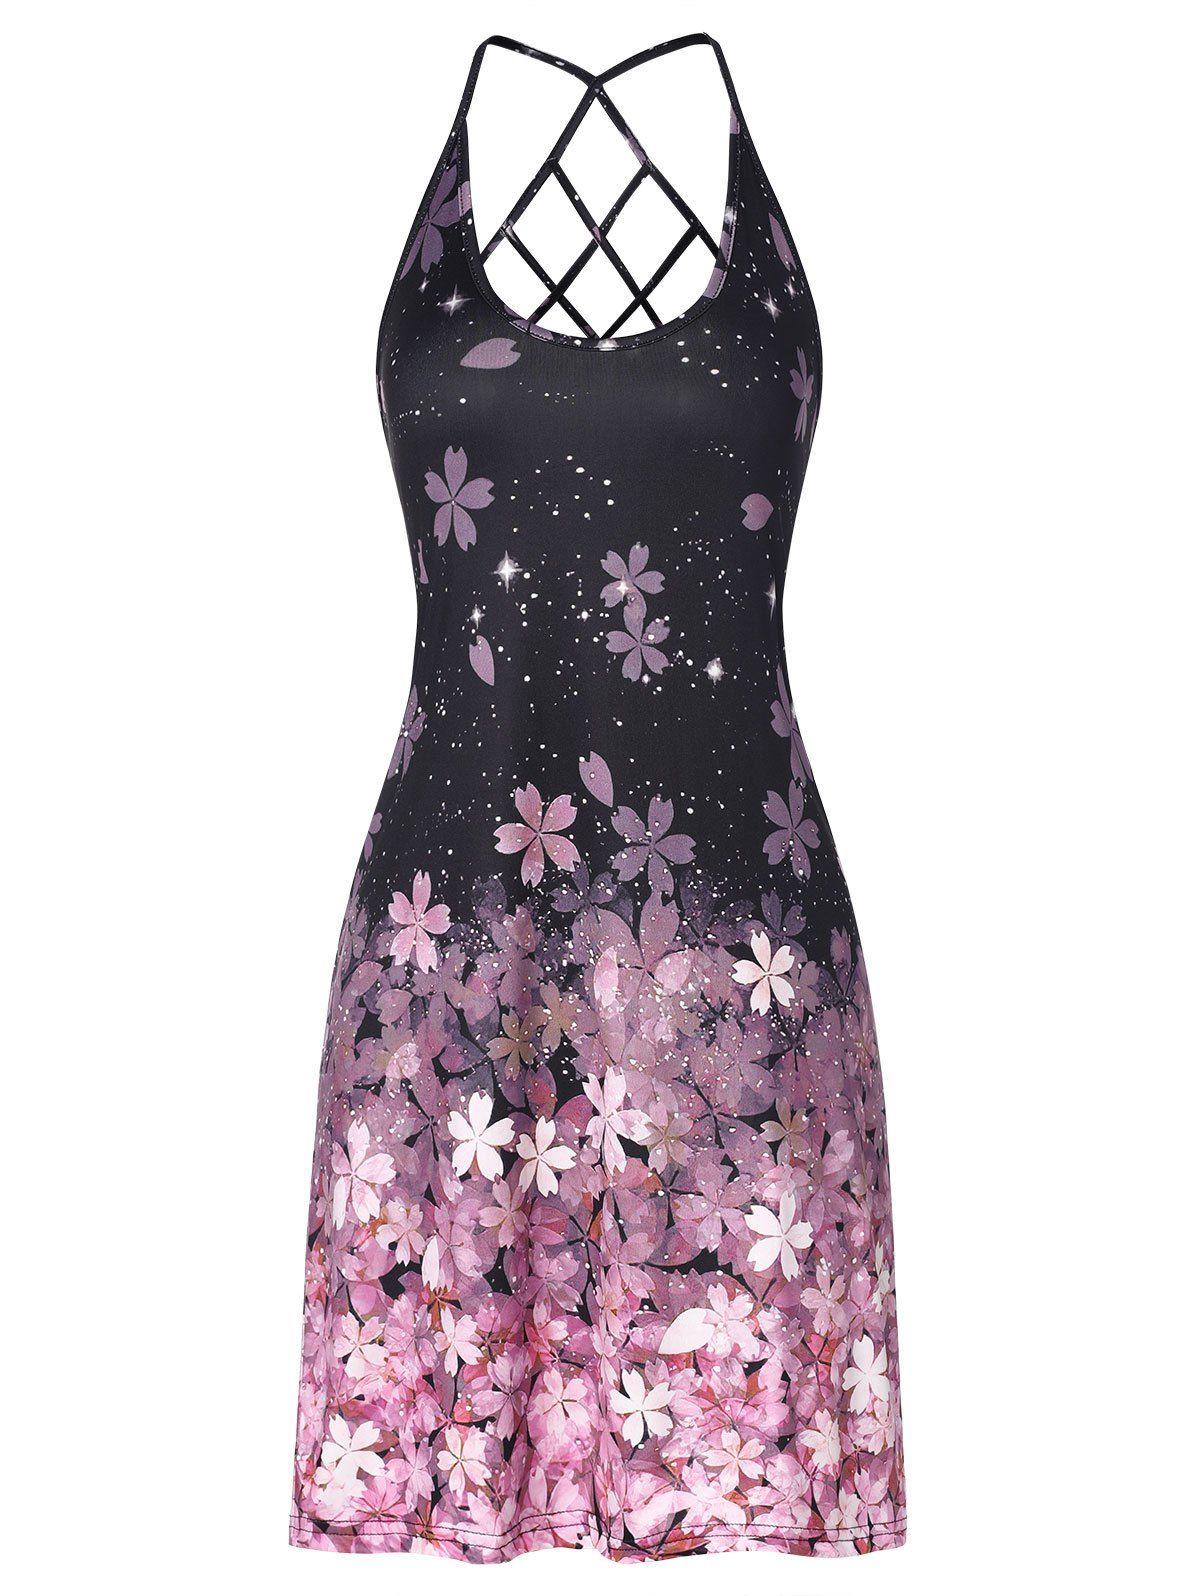 Floral Print Lattice Cutout Cami Dress - BLACK L